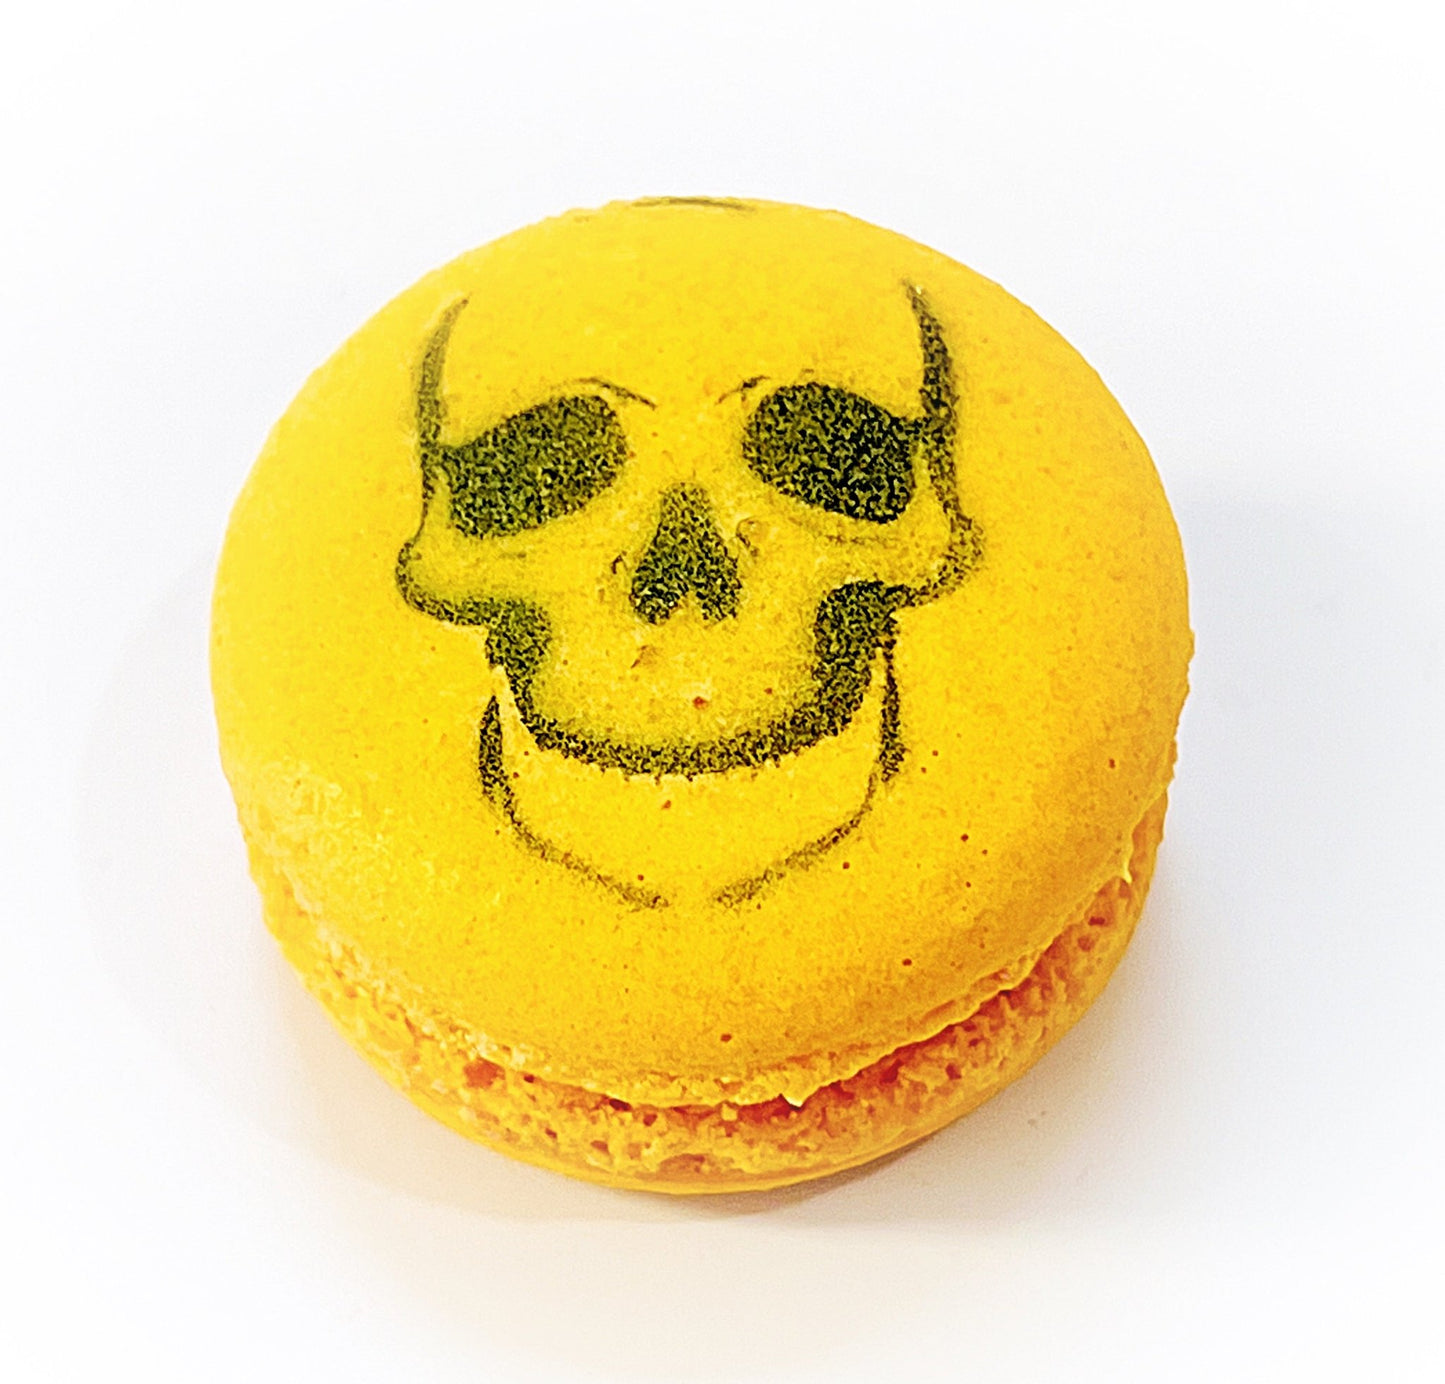 Skull French Macaron | Choose Your Favorite Flavors - Macaron Centrale12 PackOrange